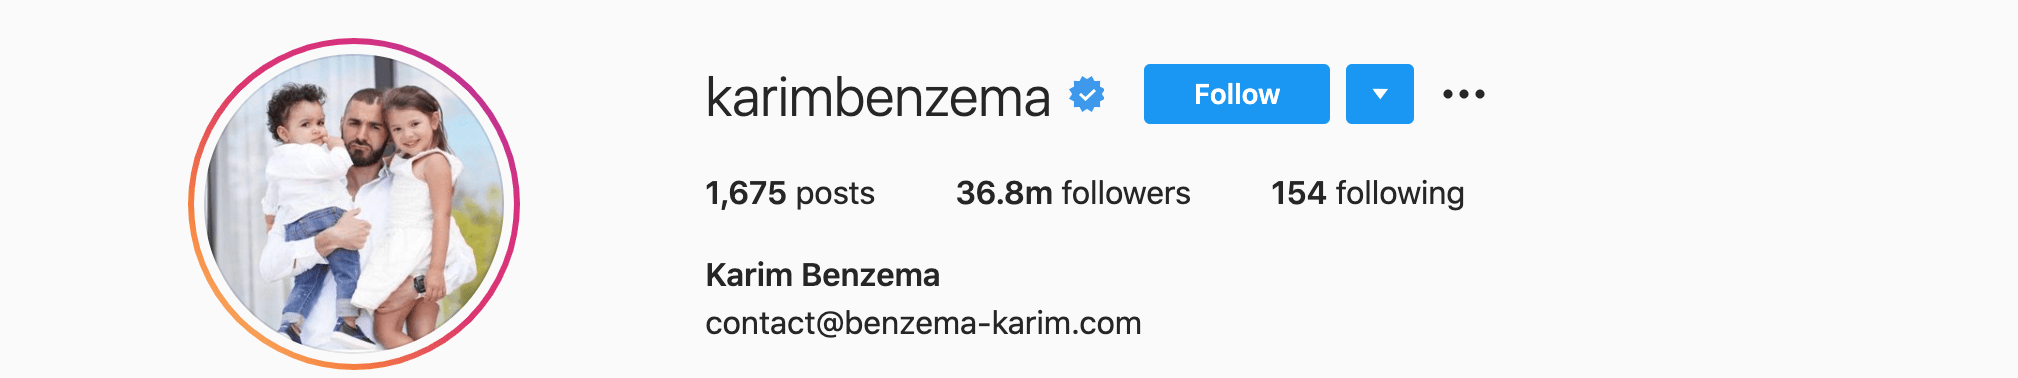 Top Instagram Influencers - KARIM BENZEMA